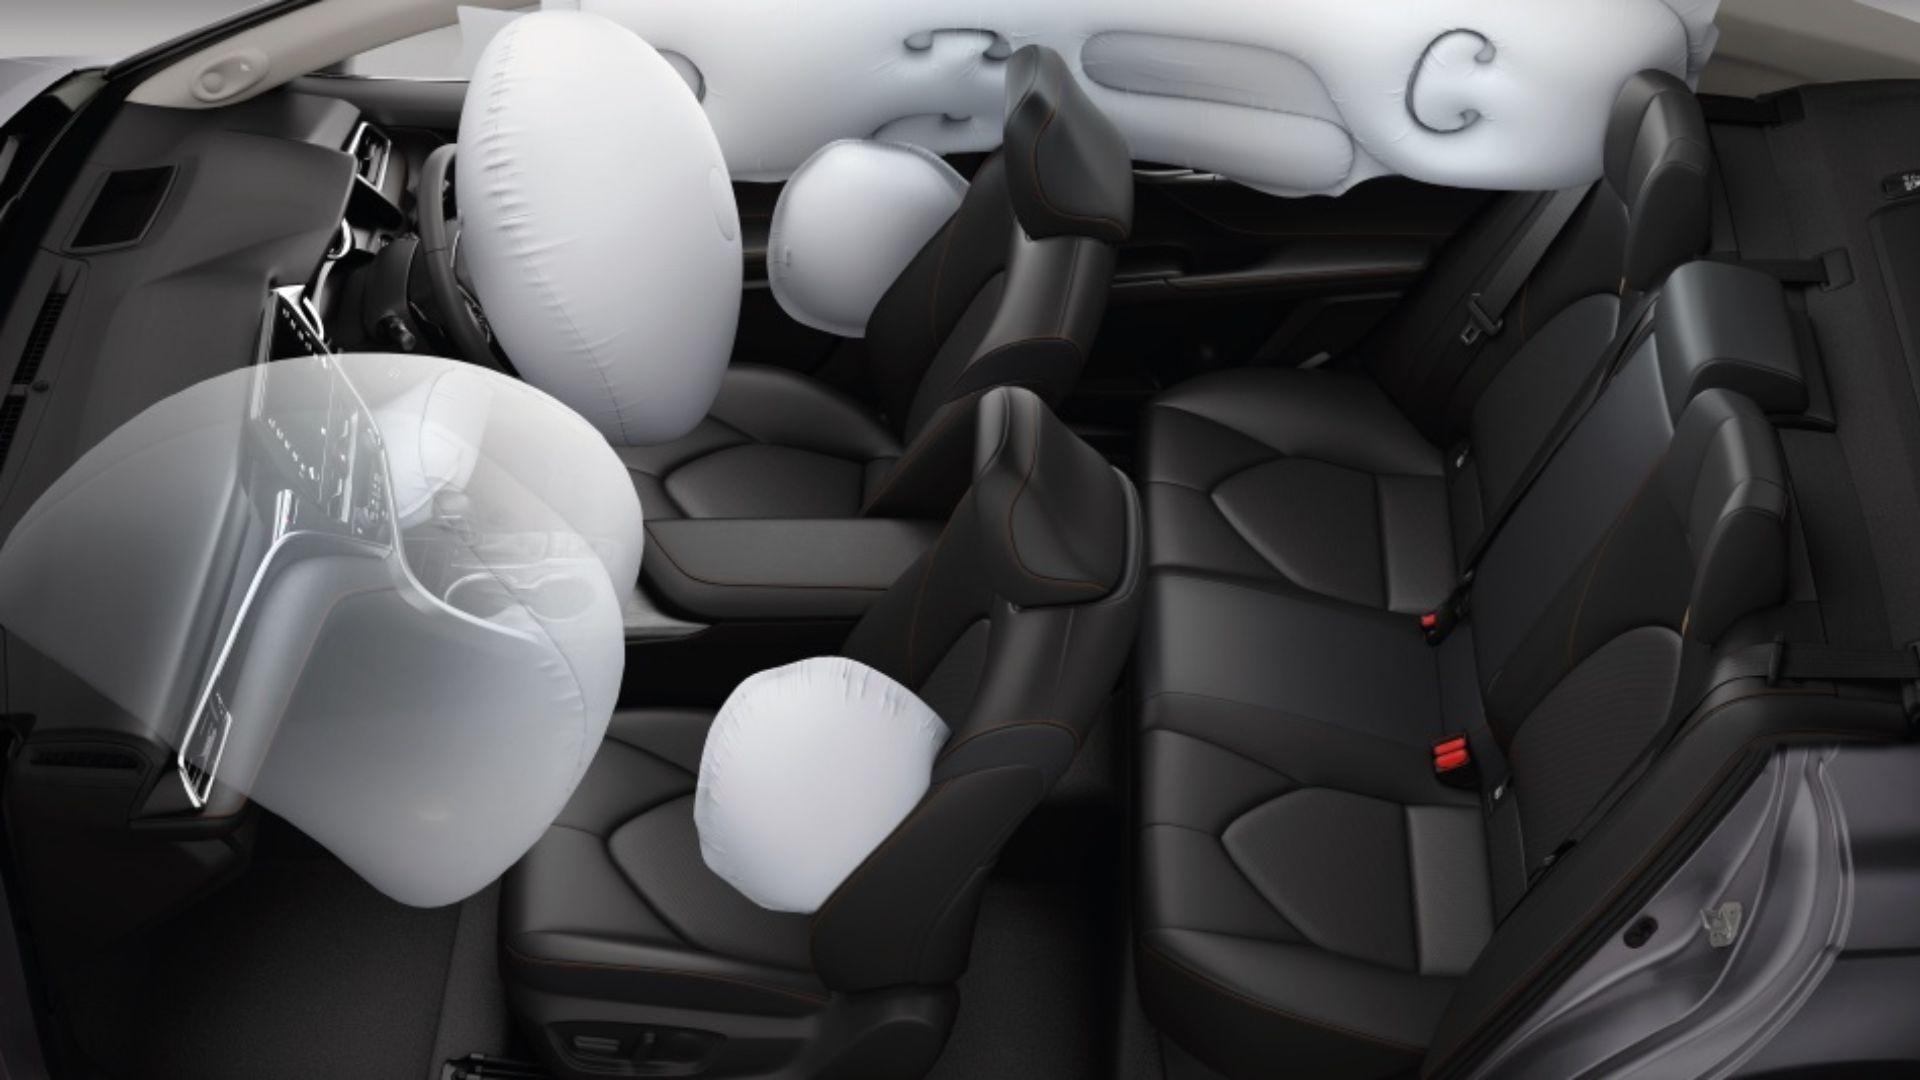 TRAC - LuxCar - Toyota Camry - Interior 2.jpg